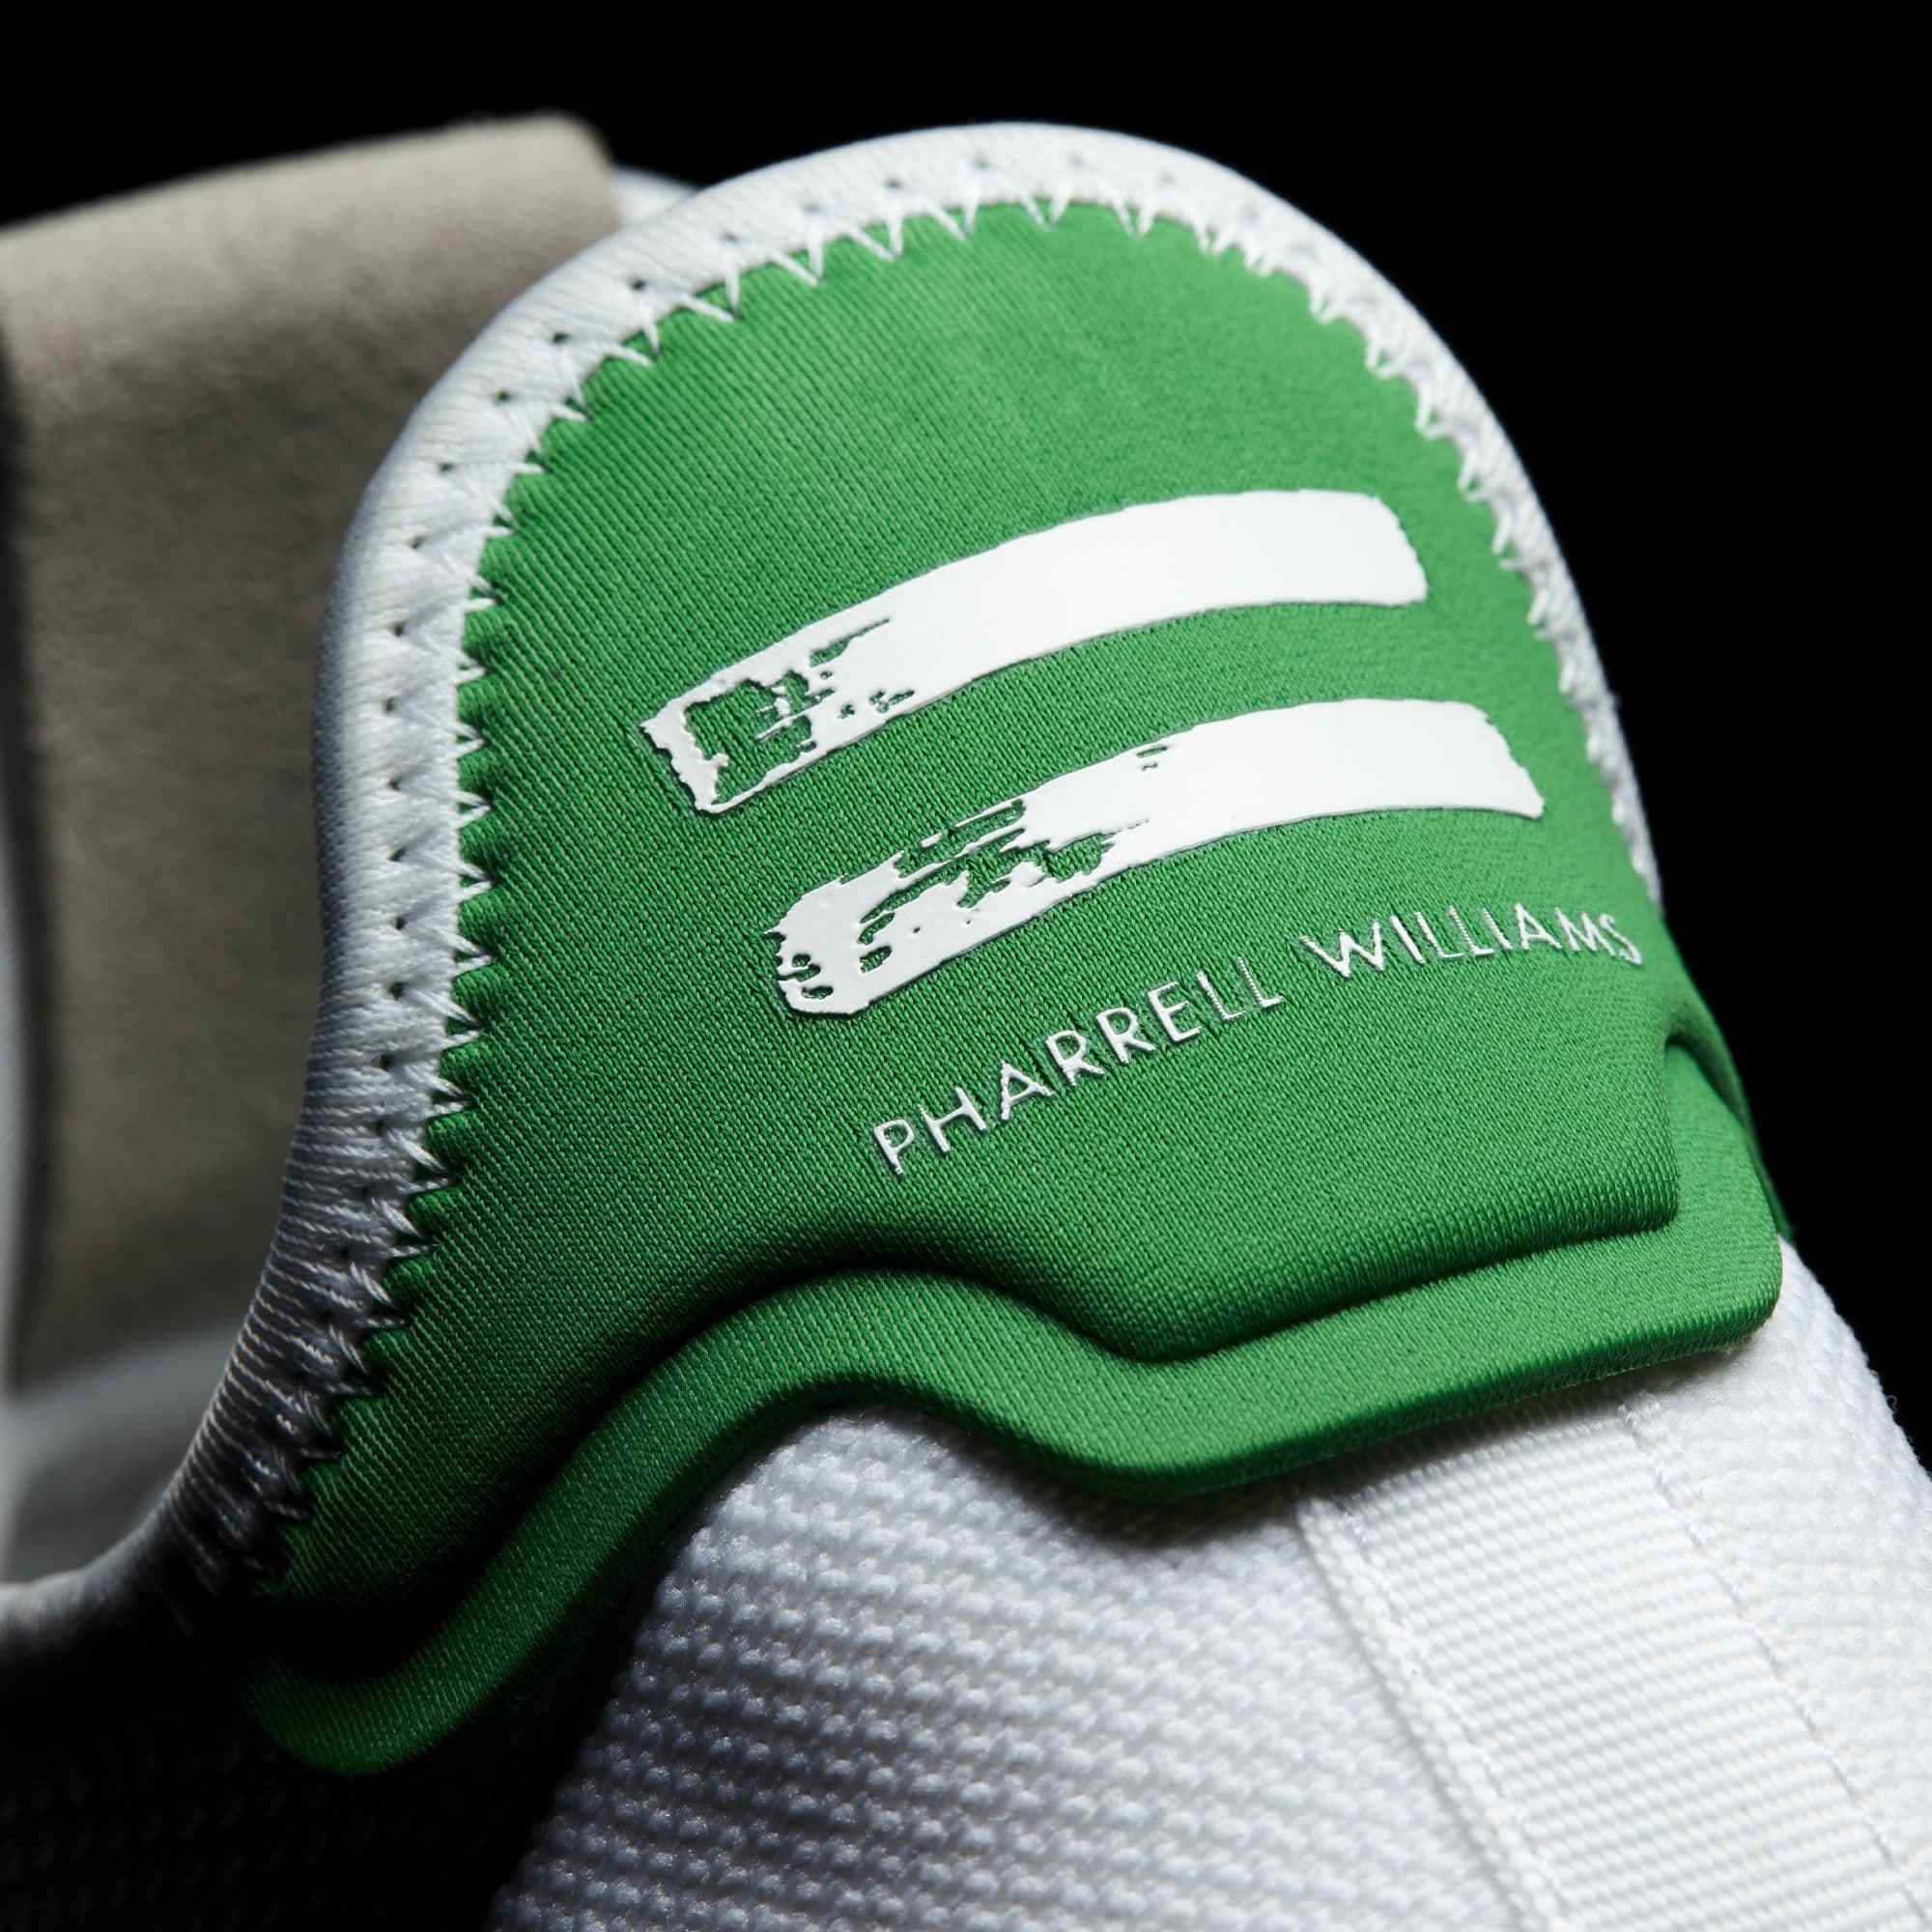 Pharrell Williams x adidas Tennis Hu